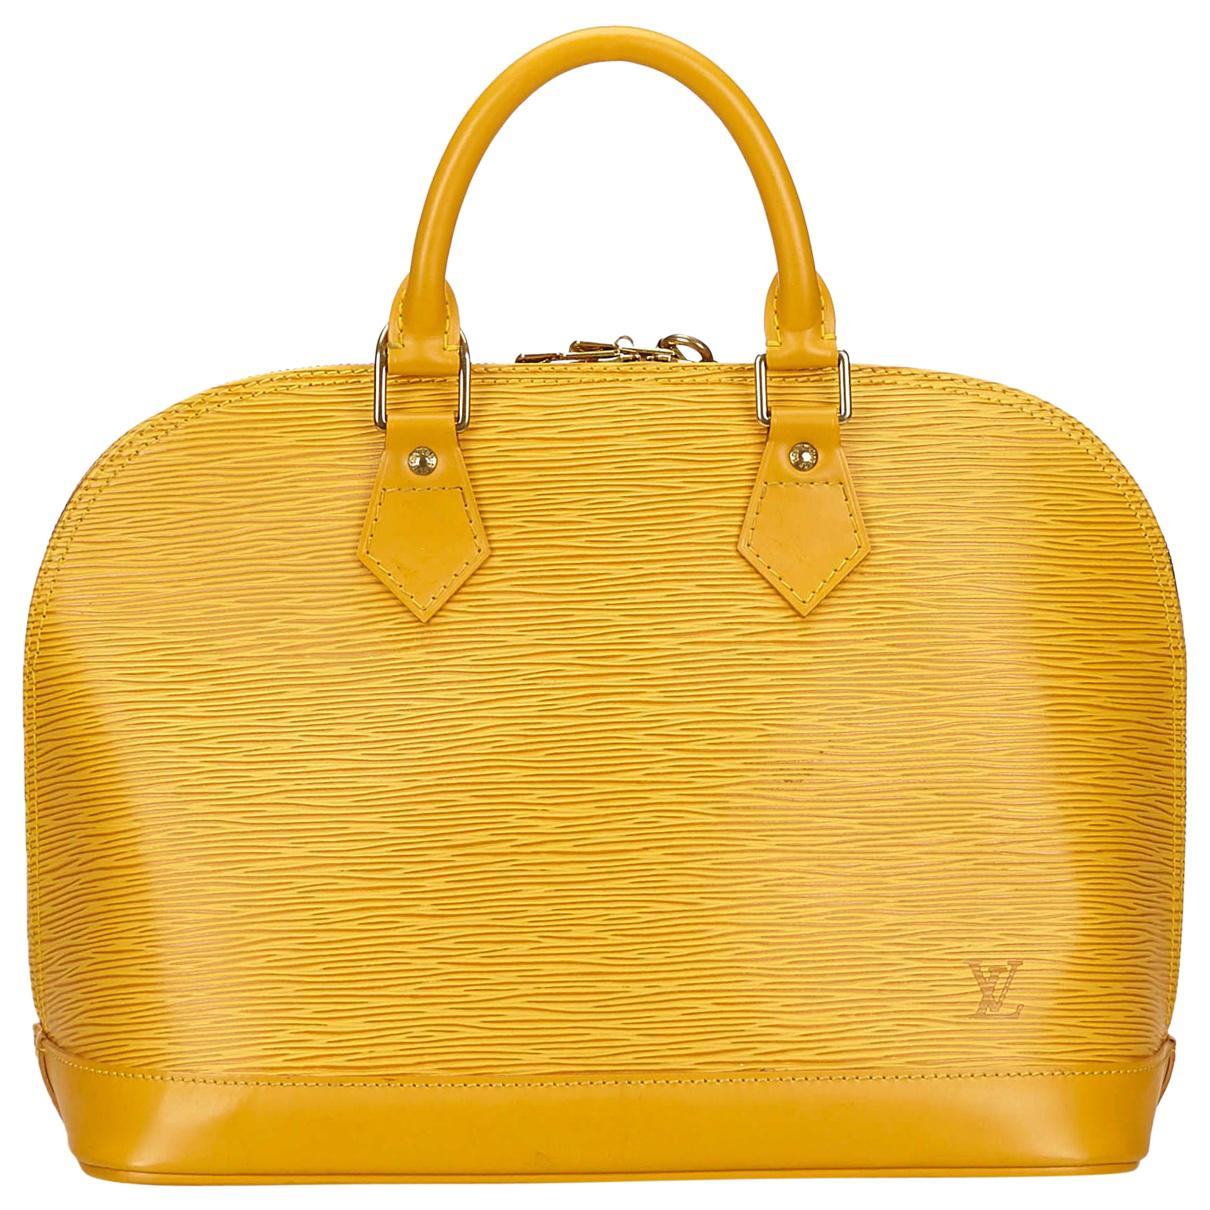 Lyst - Louis Vuitton Alma Leather Handbag in Yellow - Save 33%